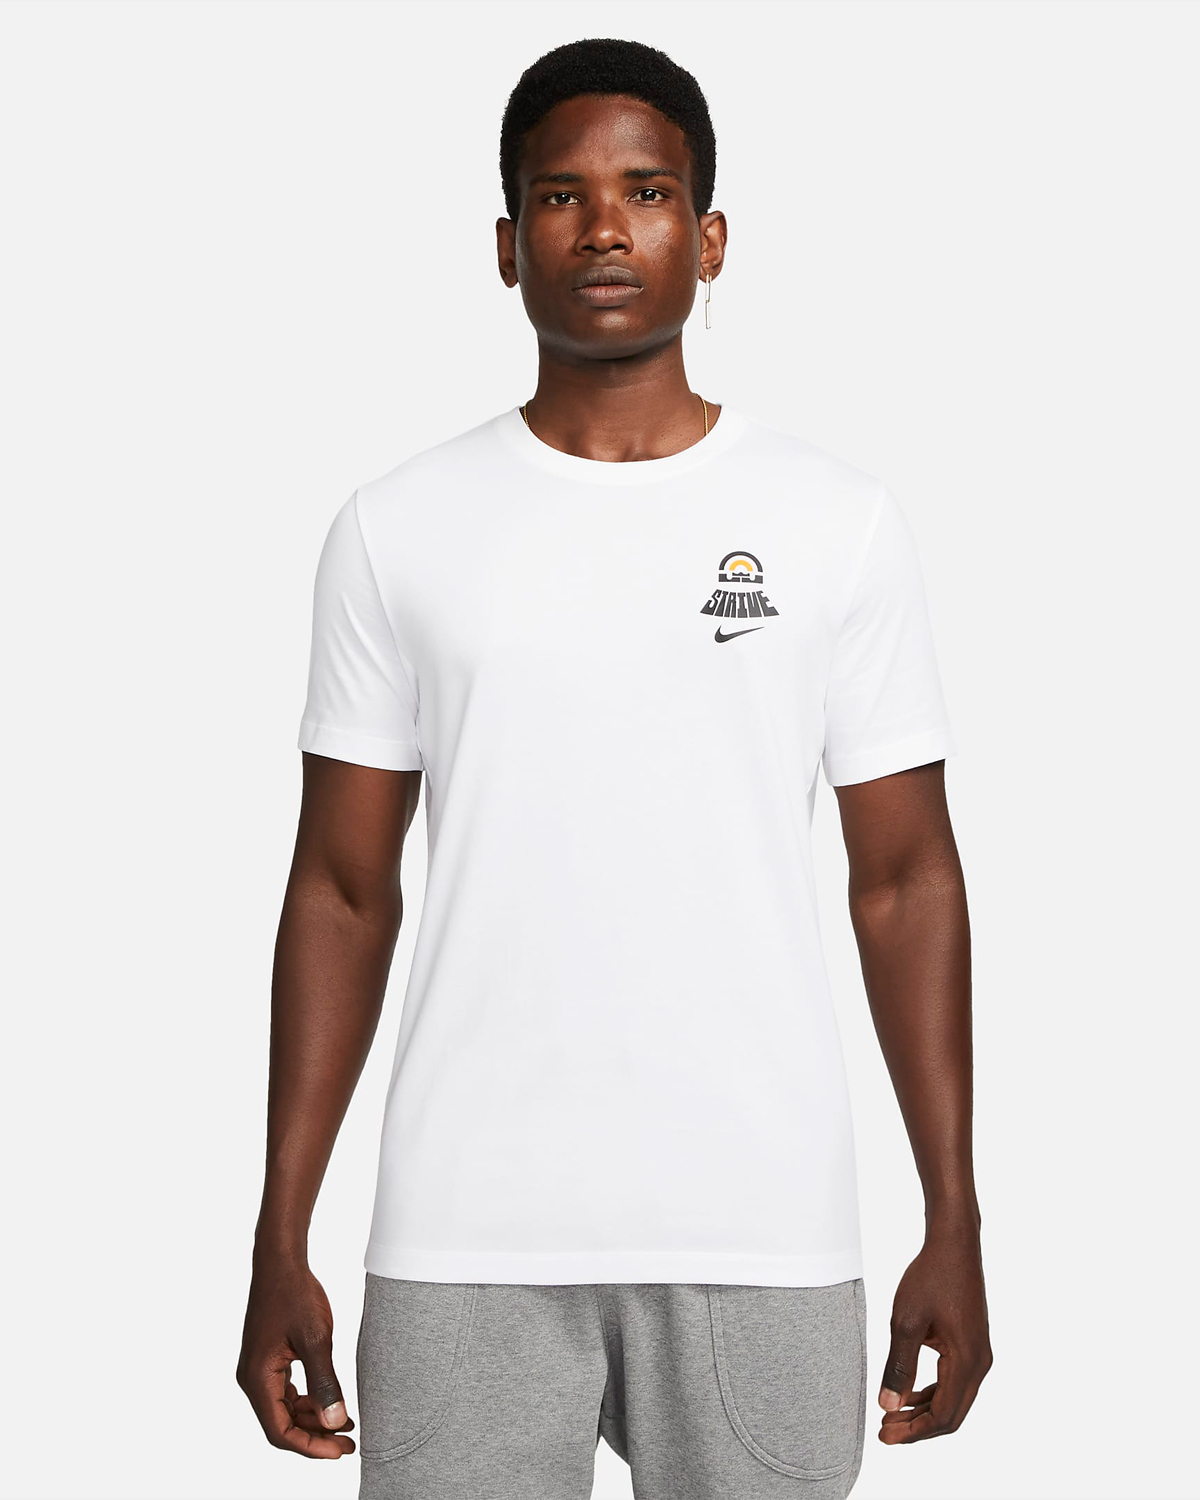 Nike-LeBron-20-T-Shirt-White-1